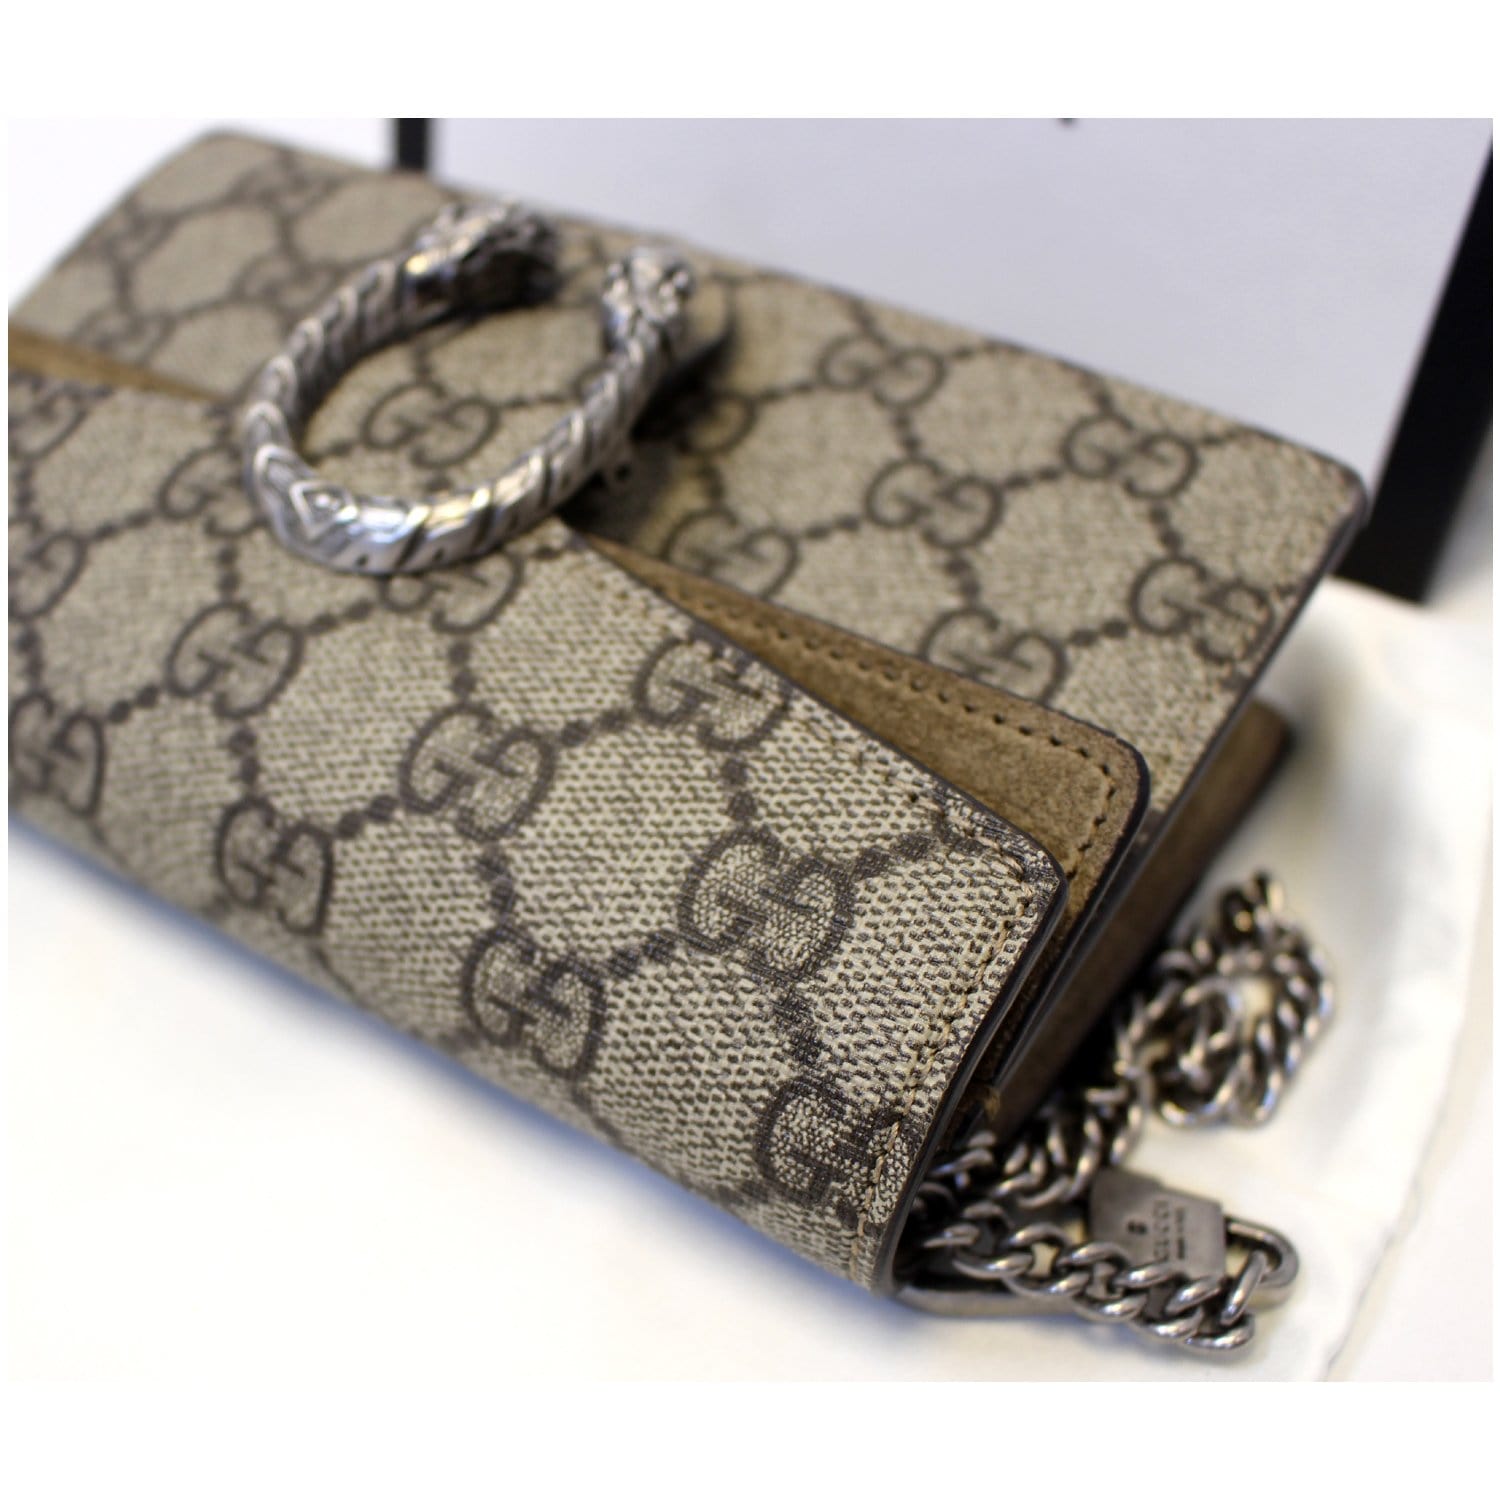 Gucci Dionysus Super Mini Gold Leather Cross-body Bag